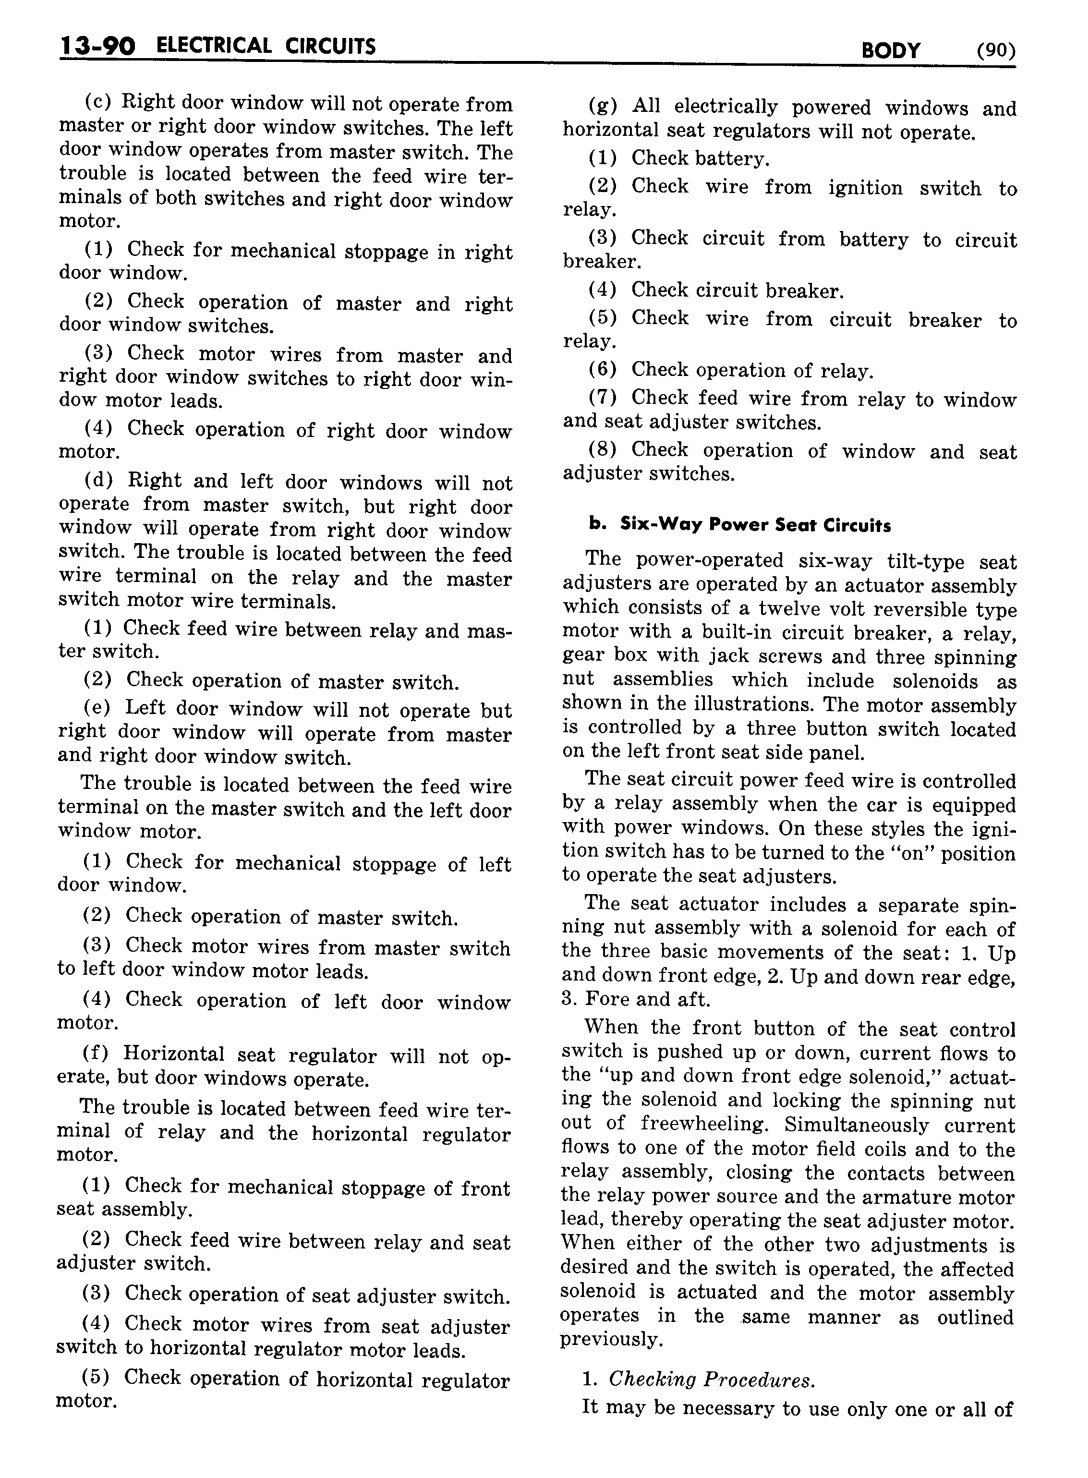 n_1957 Buick Body Service Manual-092-092.jpg